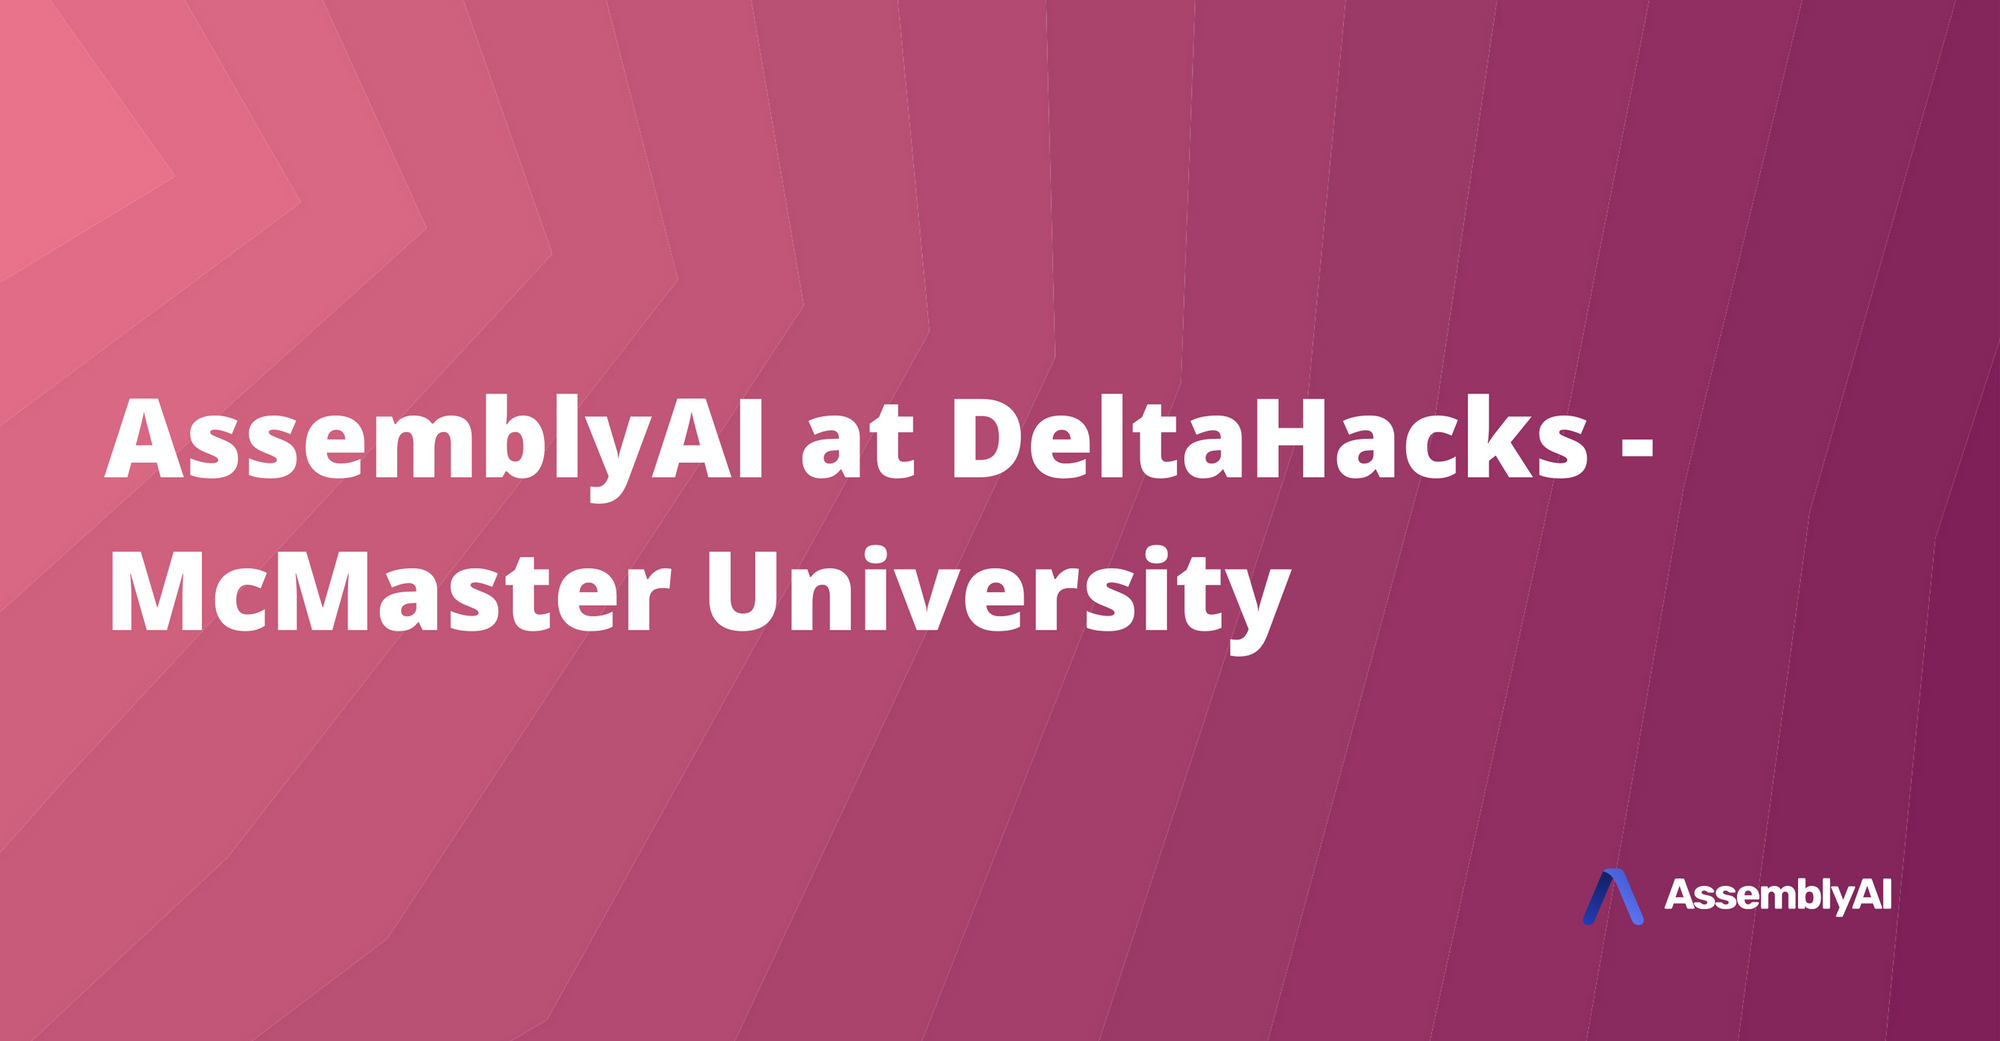 DeltaHacks - AssemblyAI at McMaster University Hackathon